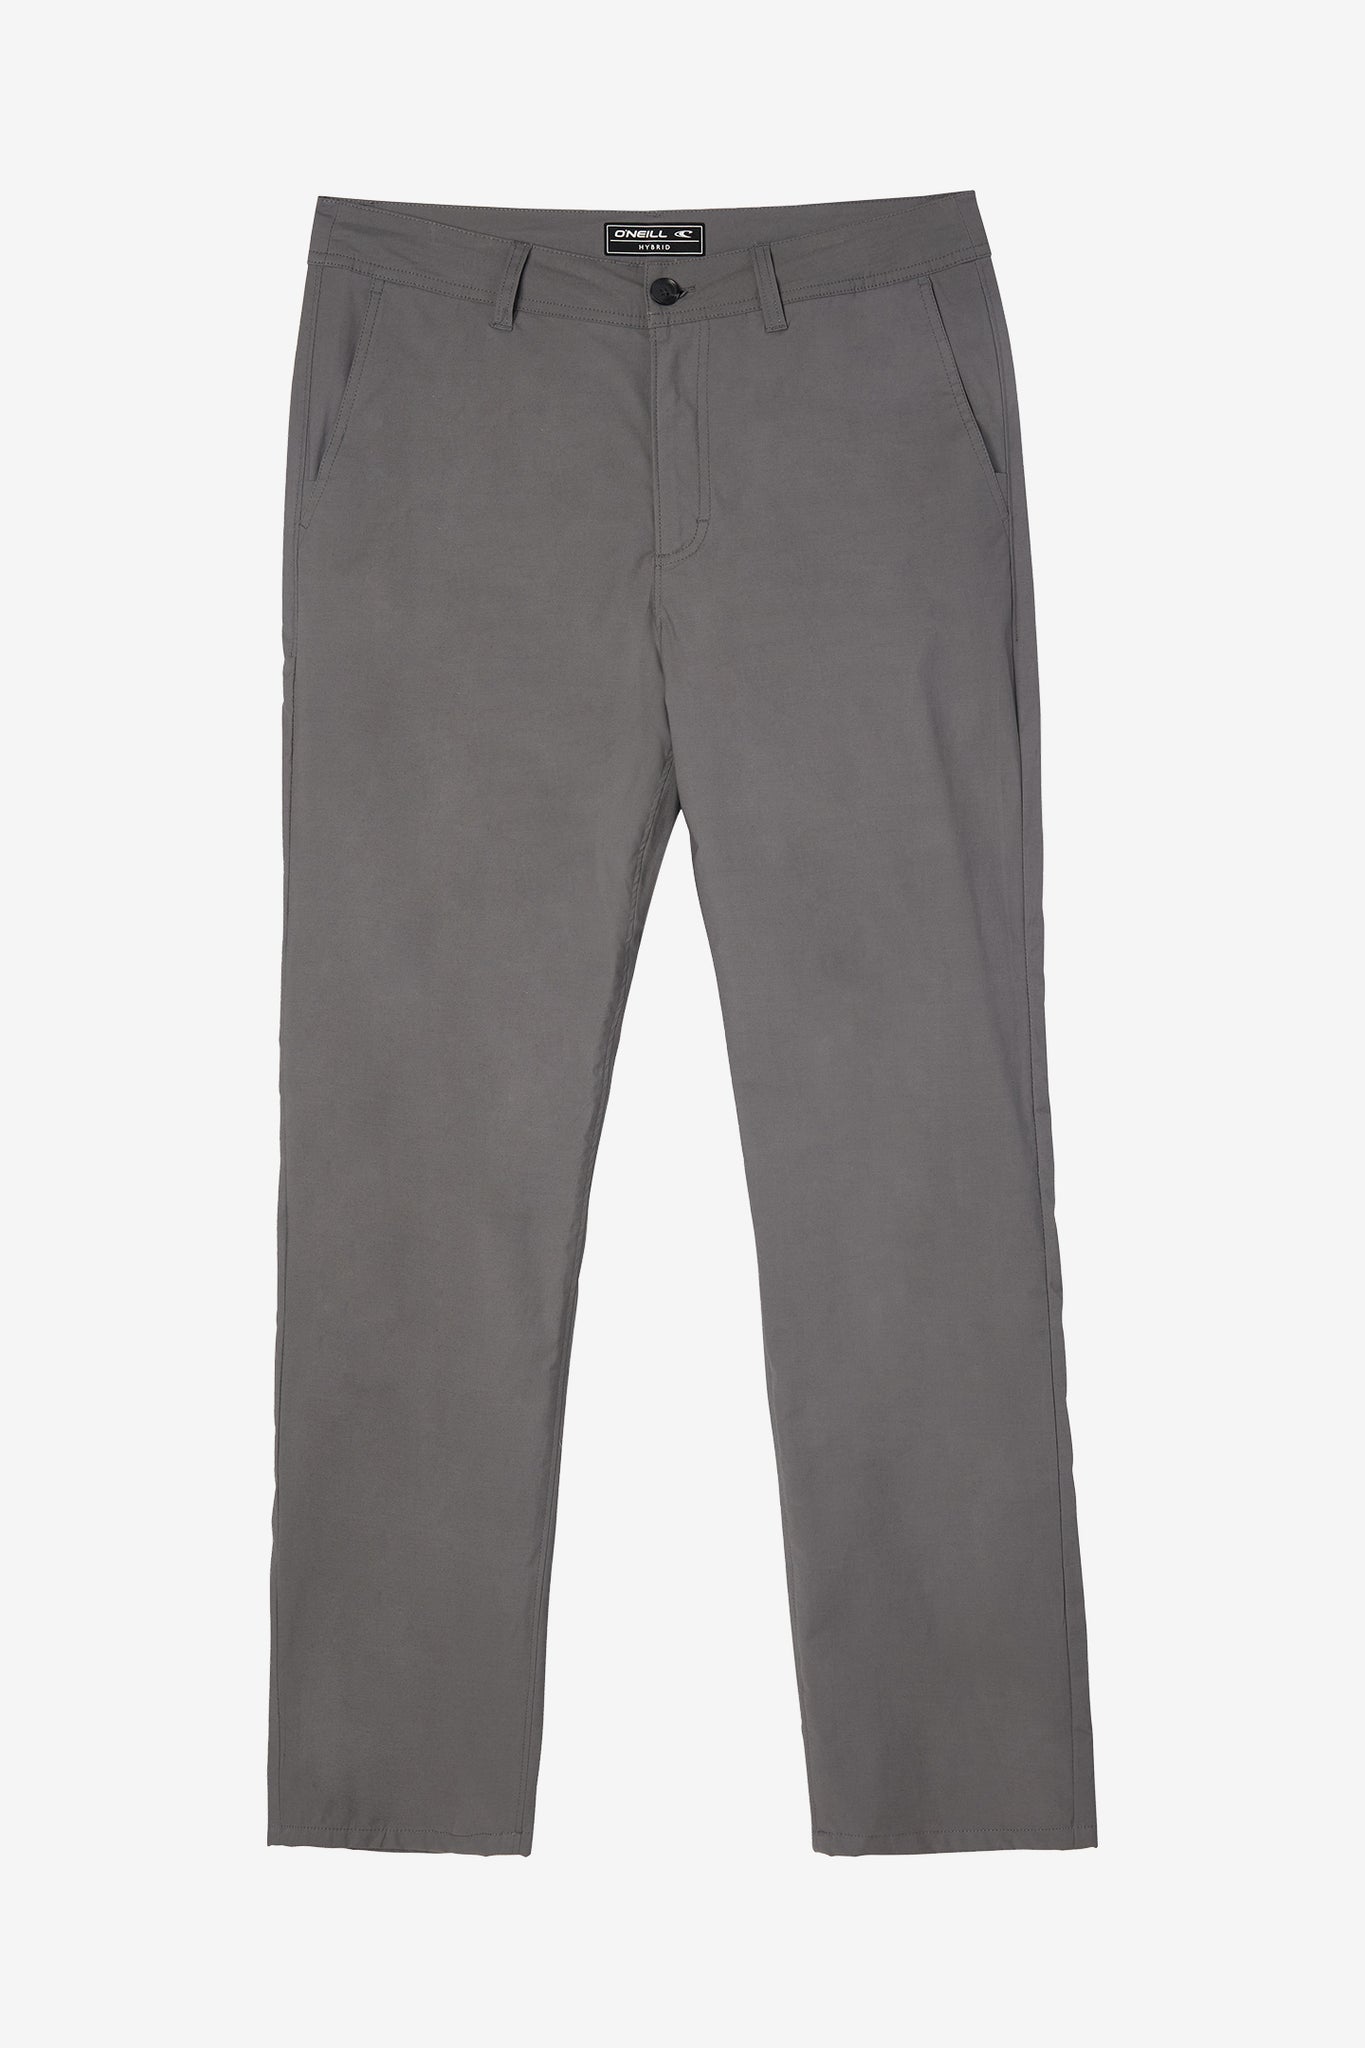 Pantalon O'NEILL Chromed - Ropa and Roll shop online